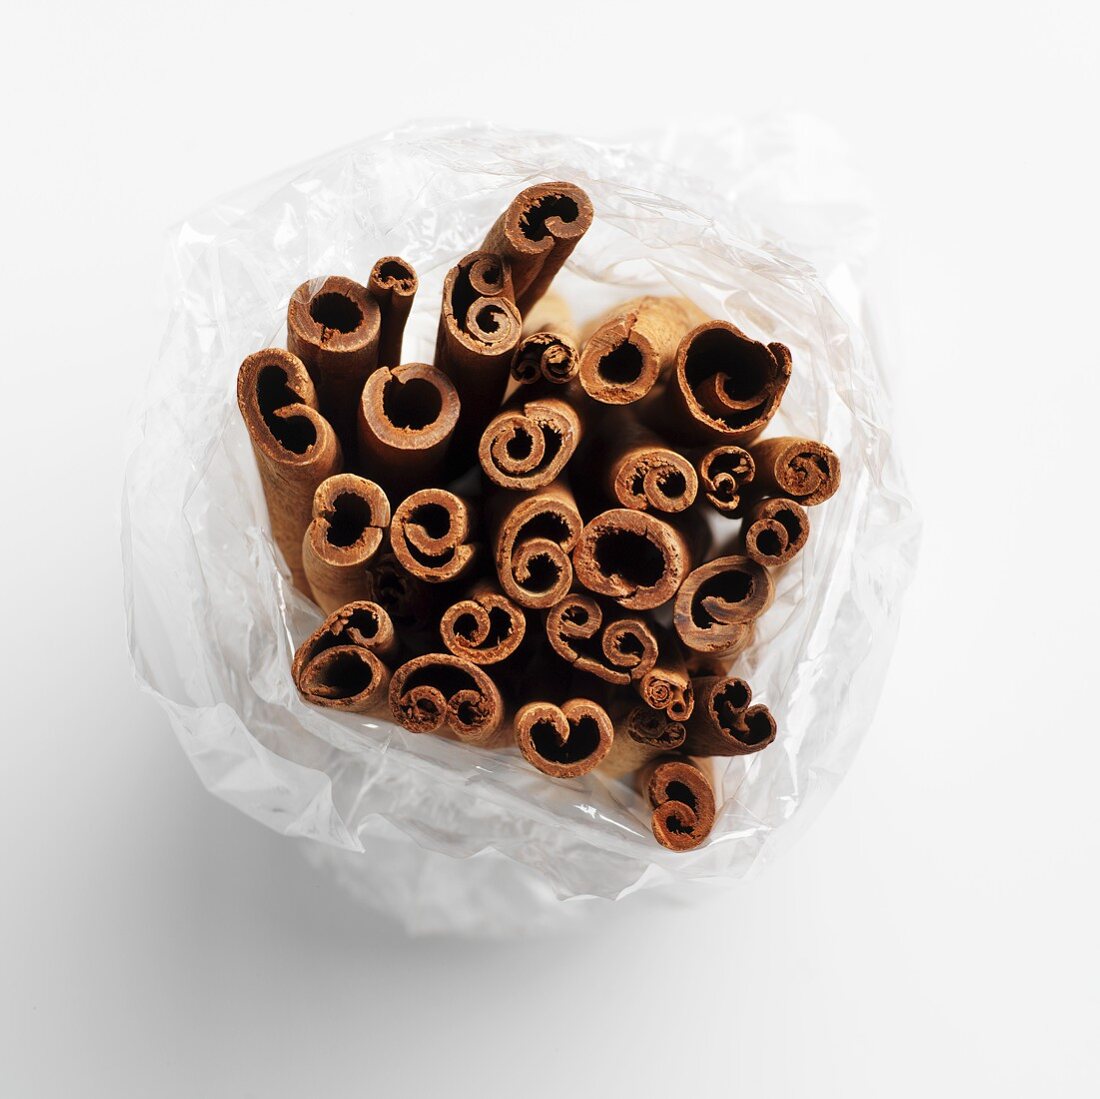 Cinnamon sticks in a plastic bag